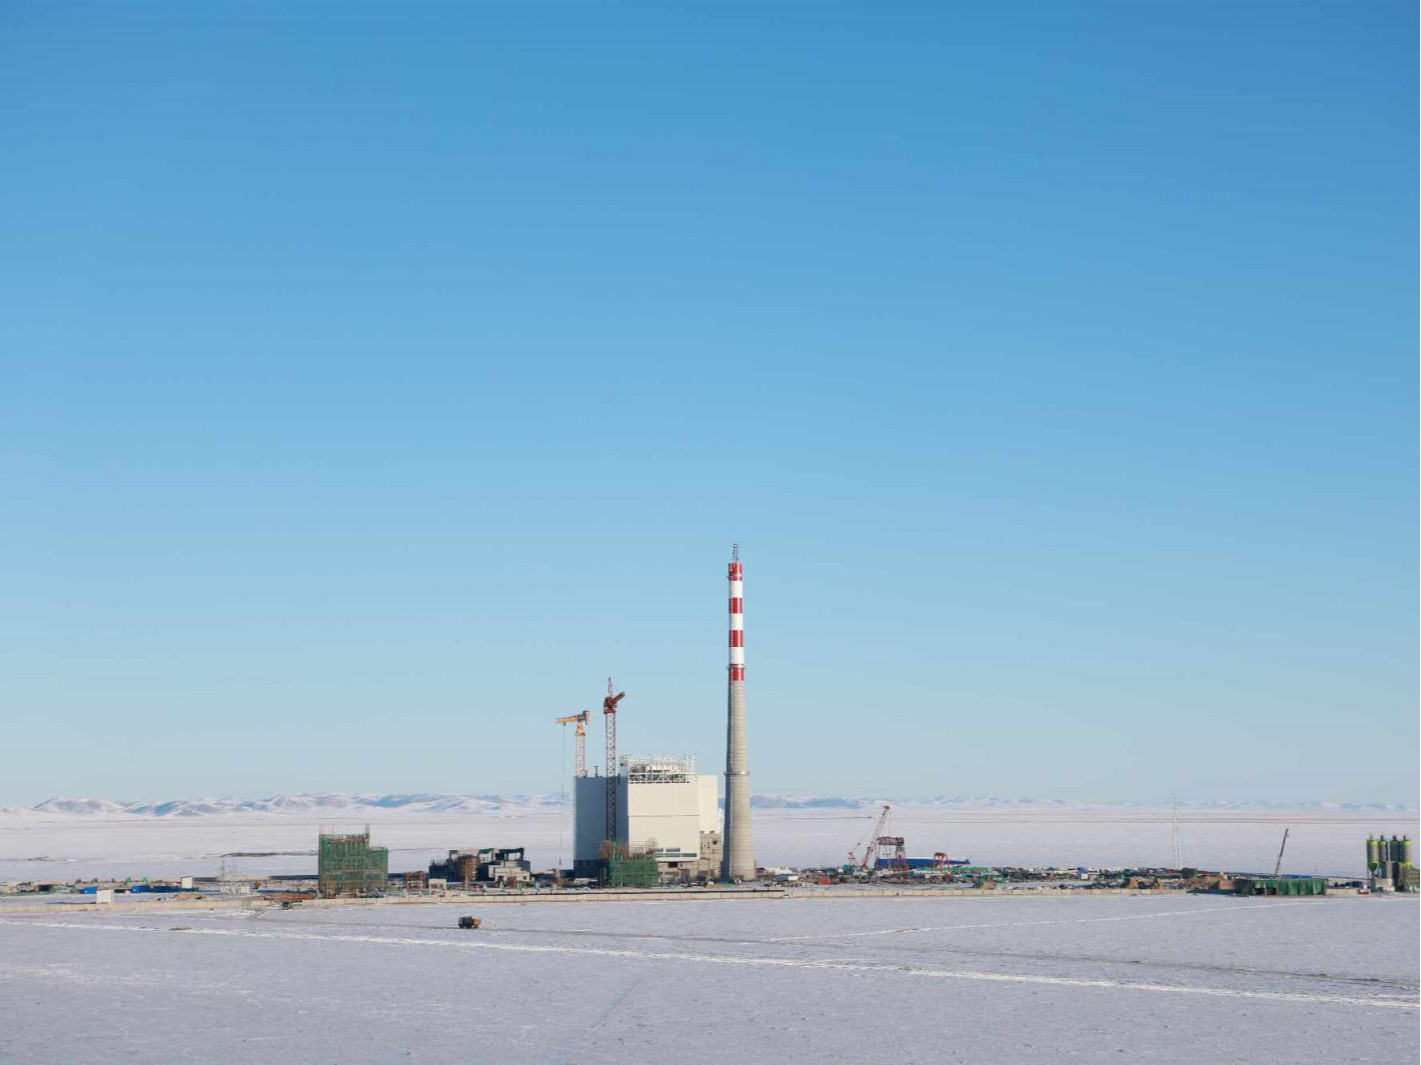 Buuruljuult炭鉱に依拠した399MWの発電所案件建設作業は50％である